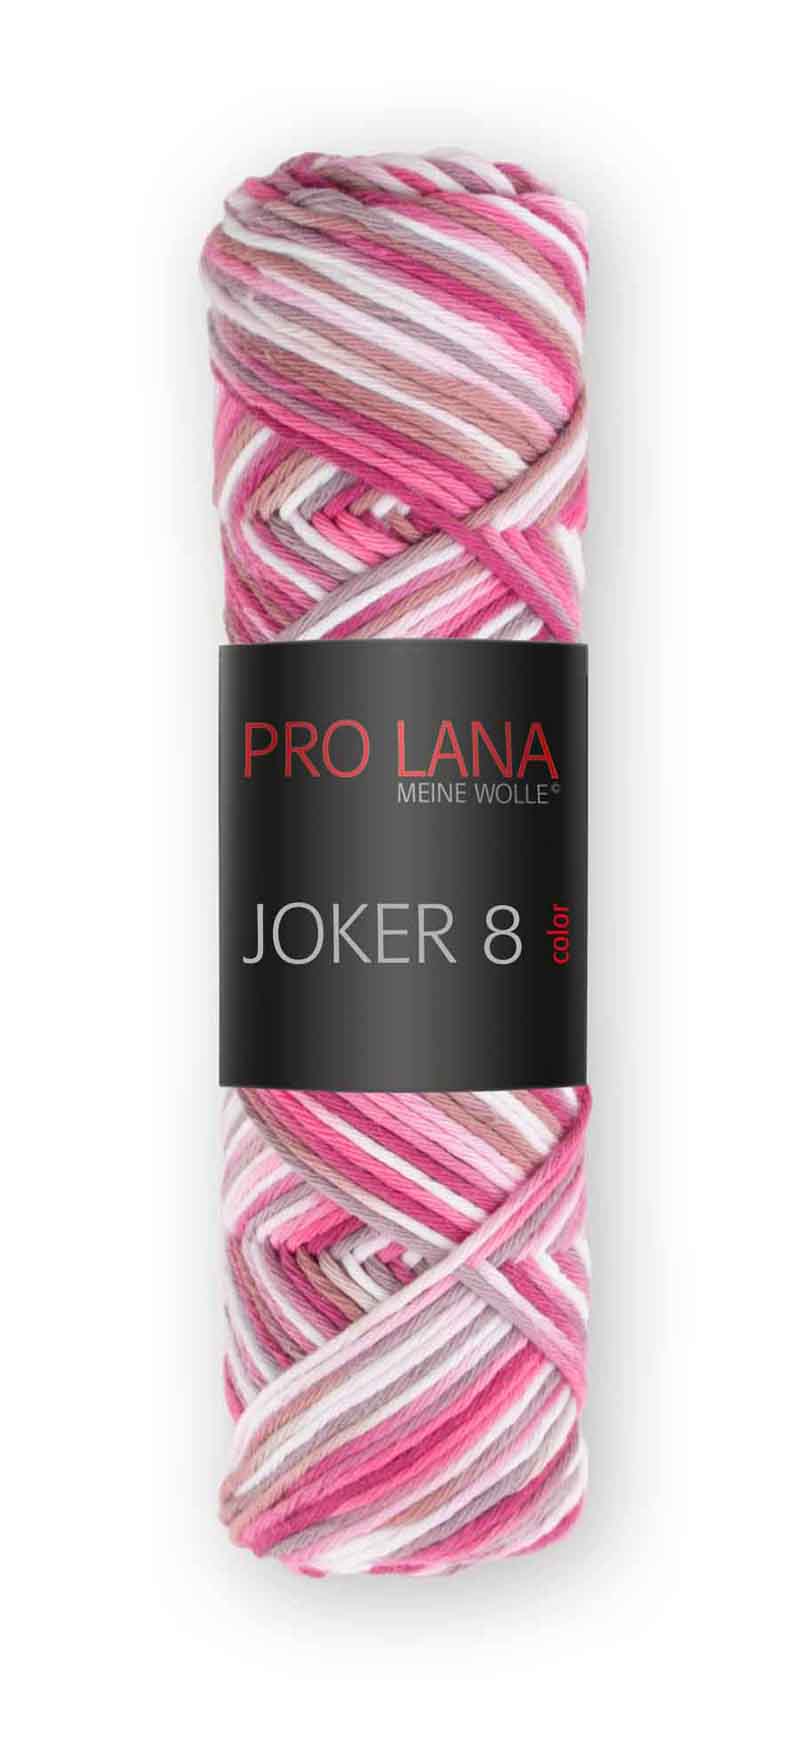 Joker 8 color Farbe 537 weiß-natur-rose-pink